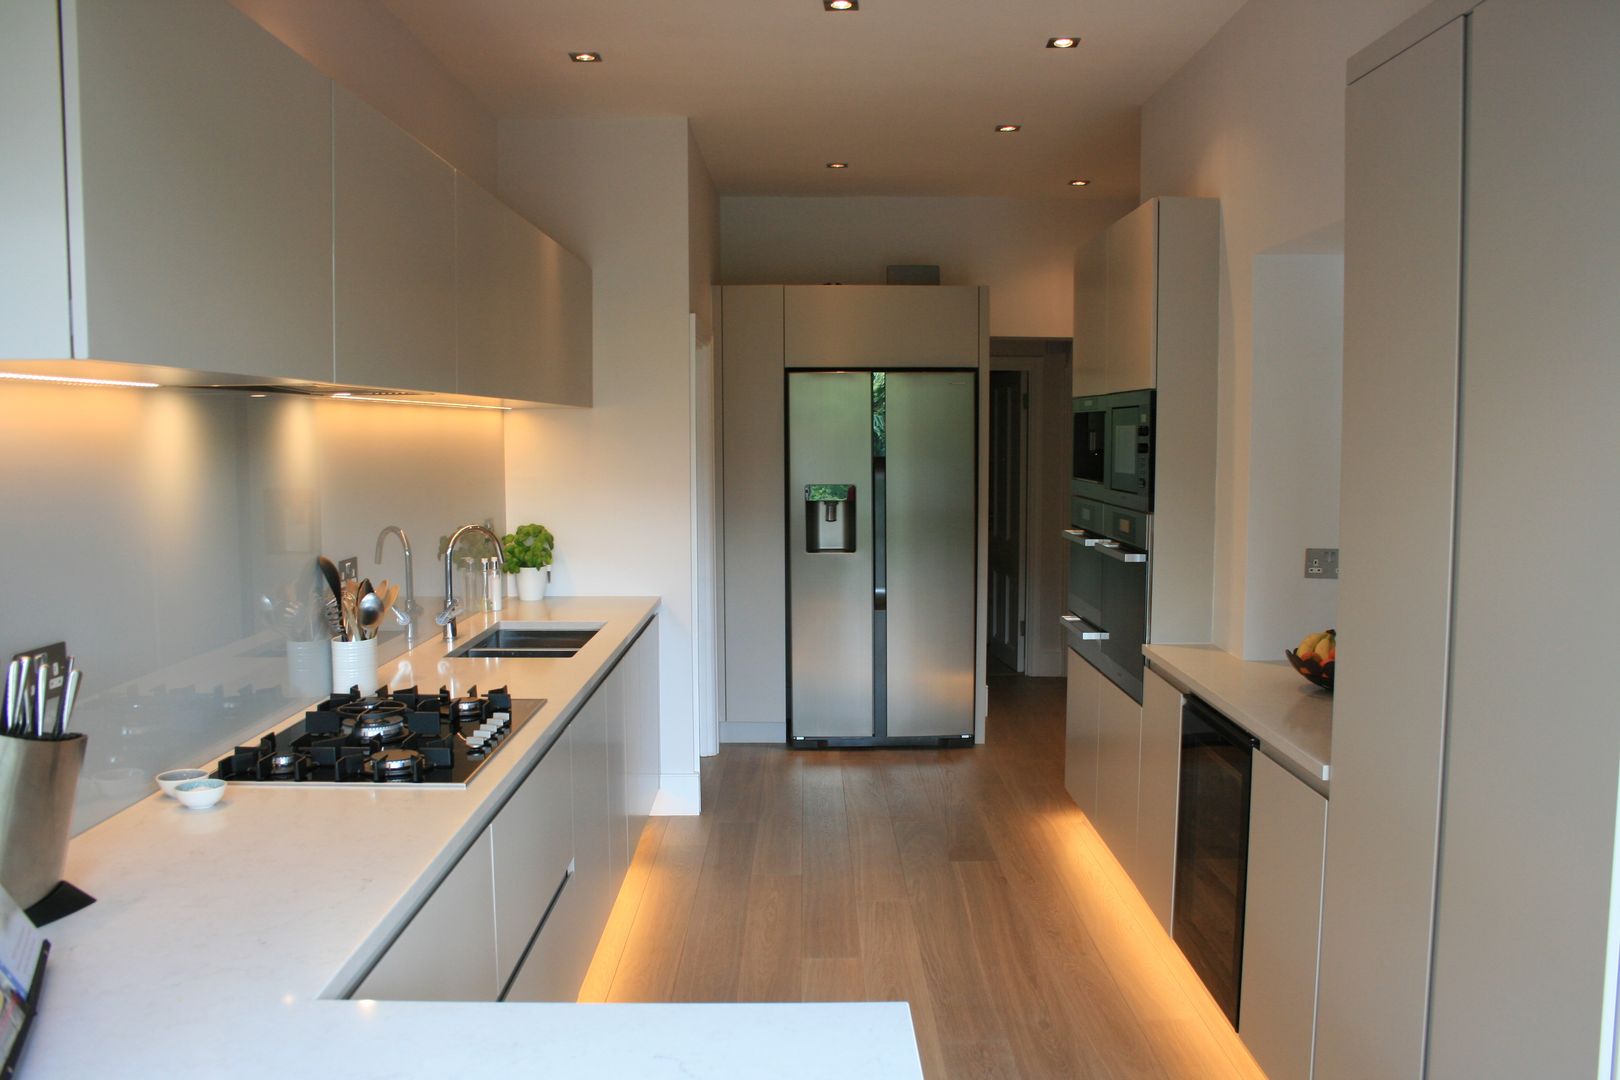 Barnes Kitchen , Place Design Kitchens and Interiors Place Design Kitchens and Interiors Minimalist kitchen